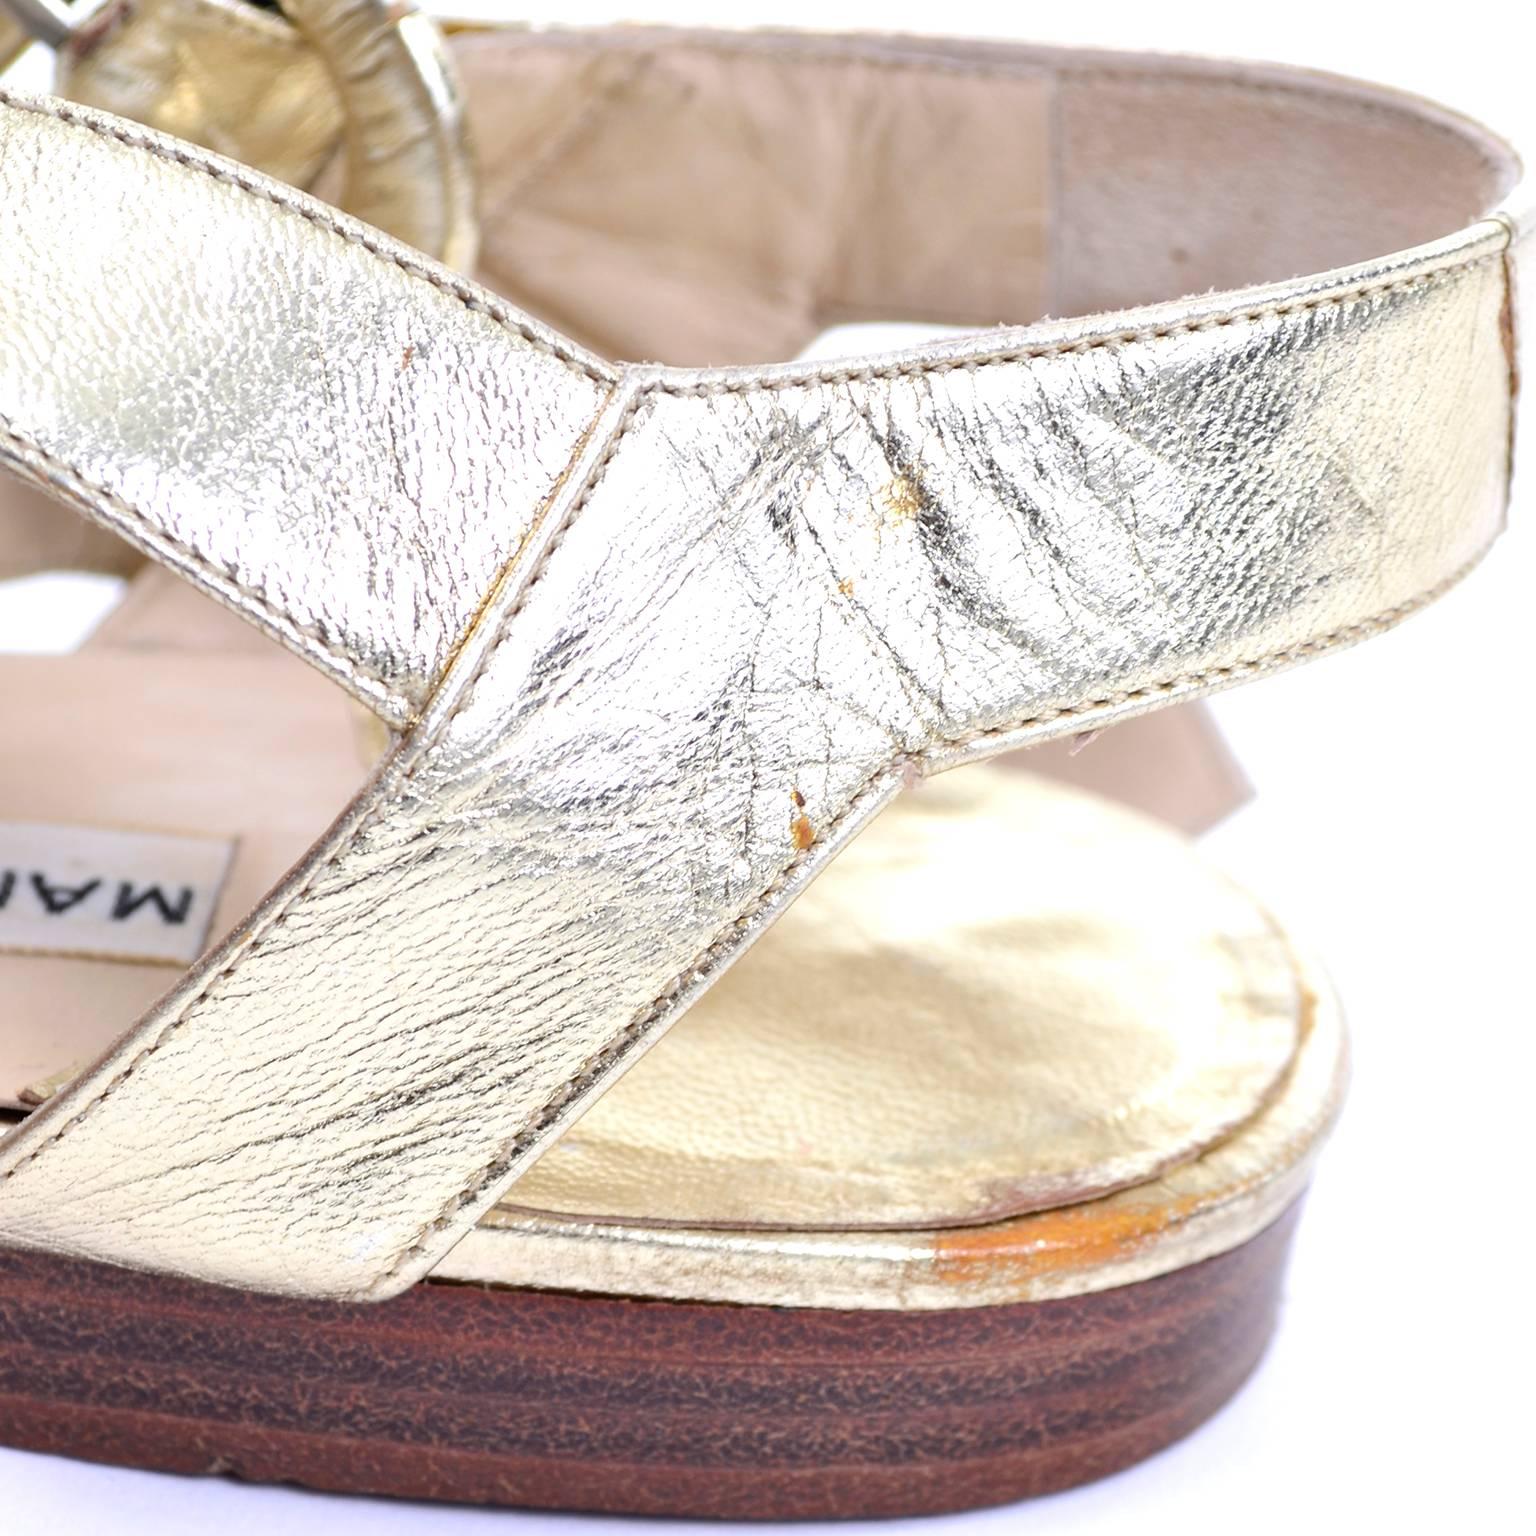 Manolo Blahnik London Shoes Gold Peep Toe Flats Sandals Size 38 2